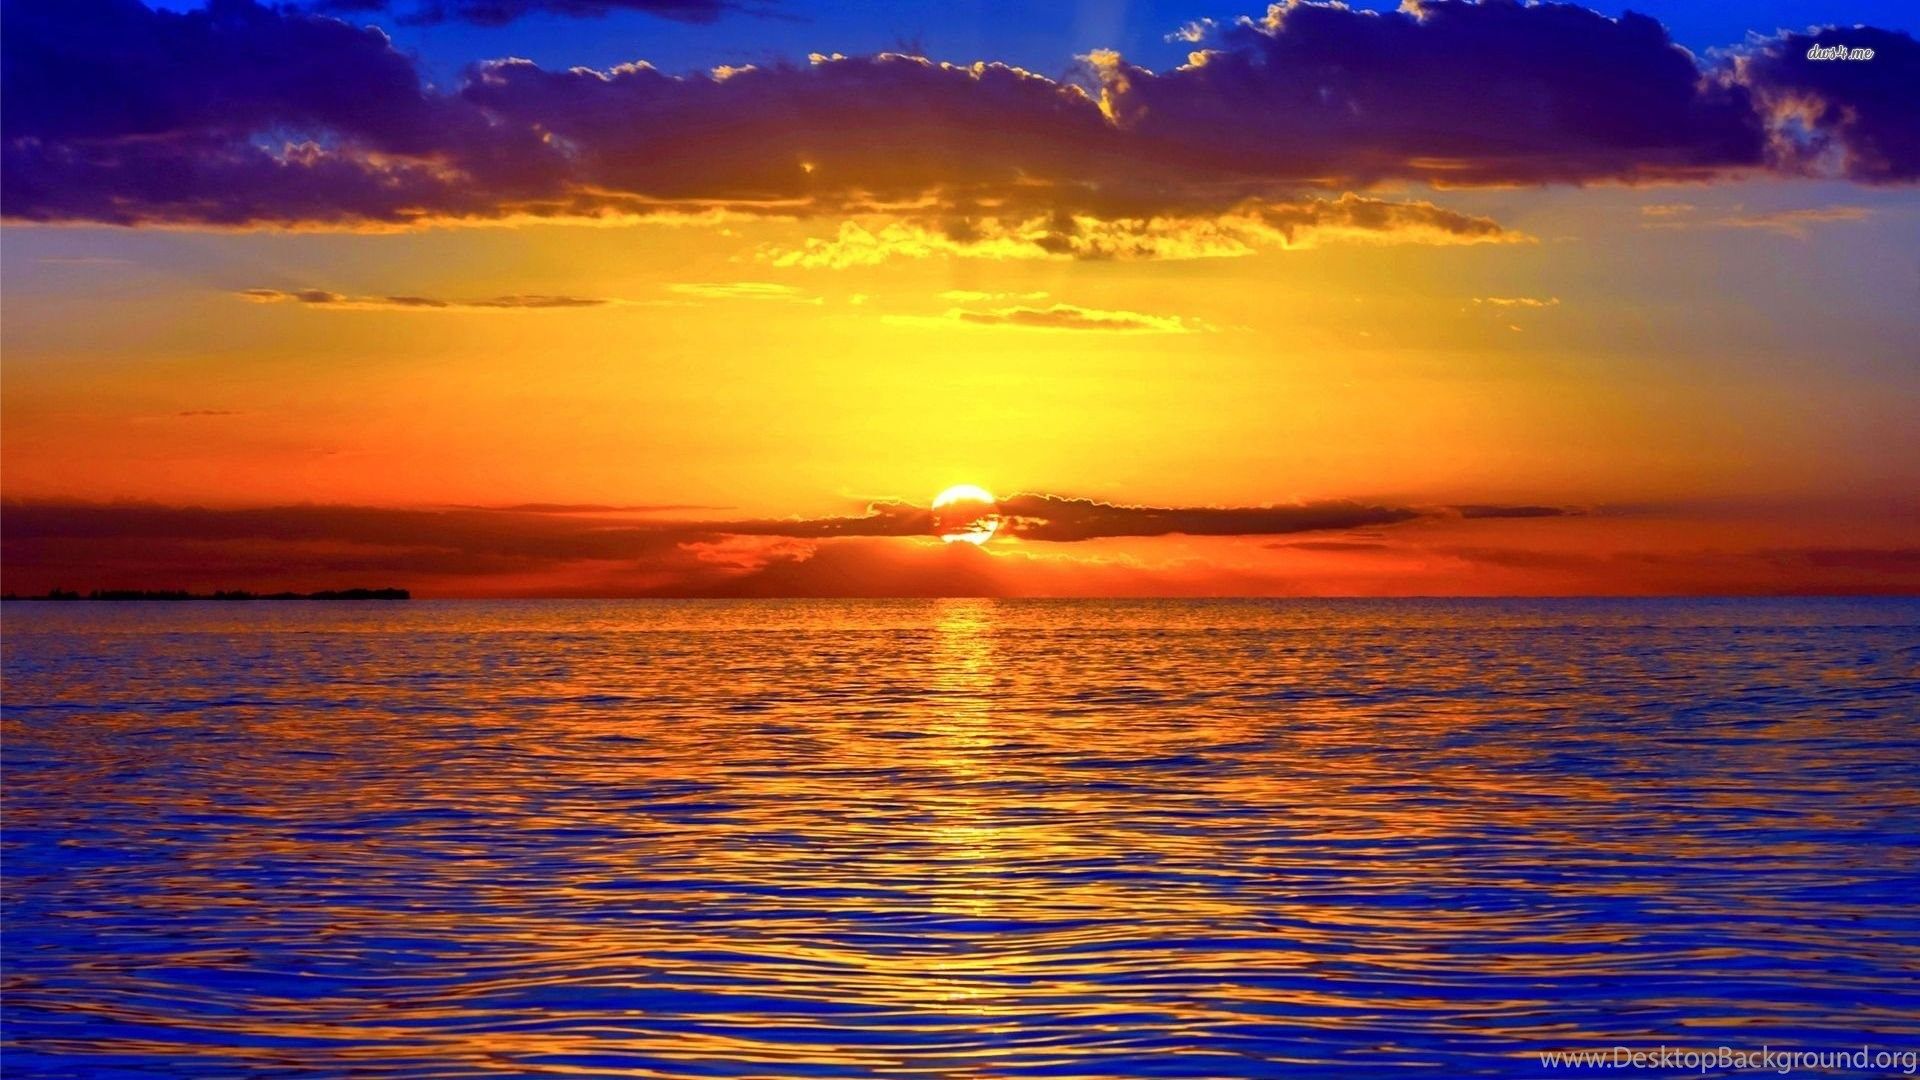 HD Morning Sunrise In The Sea Wallpaper 1080p Full Size. Desktop Background